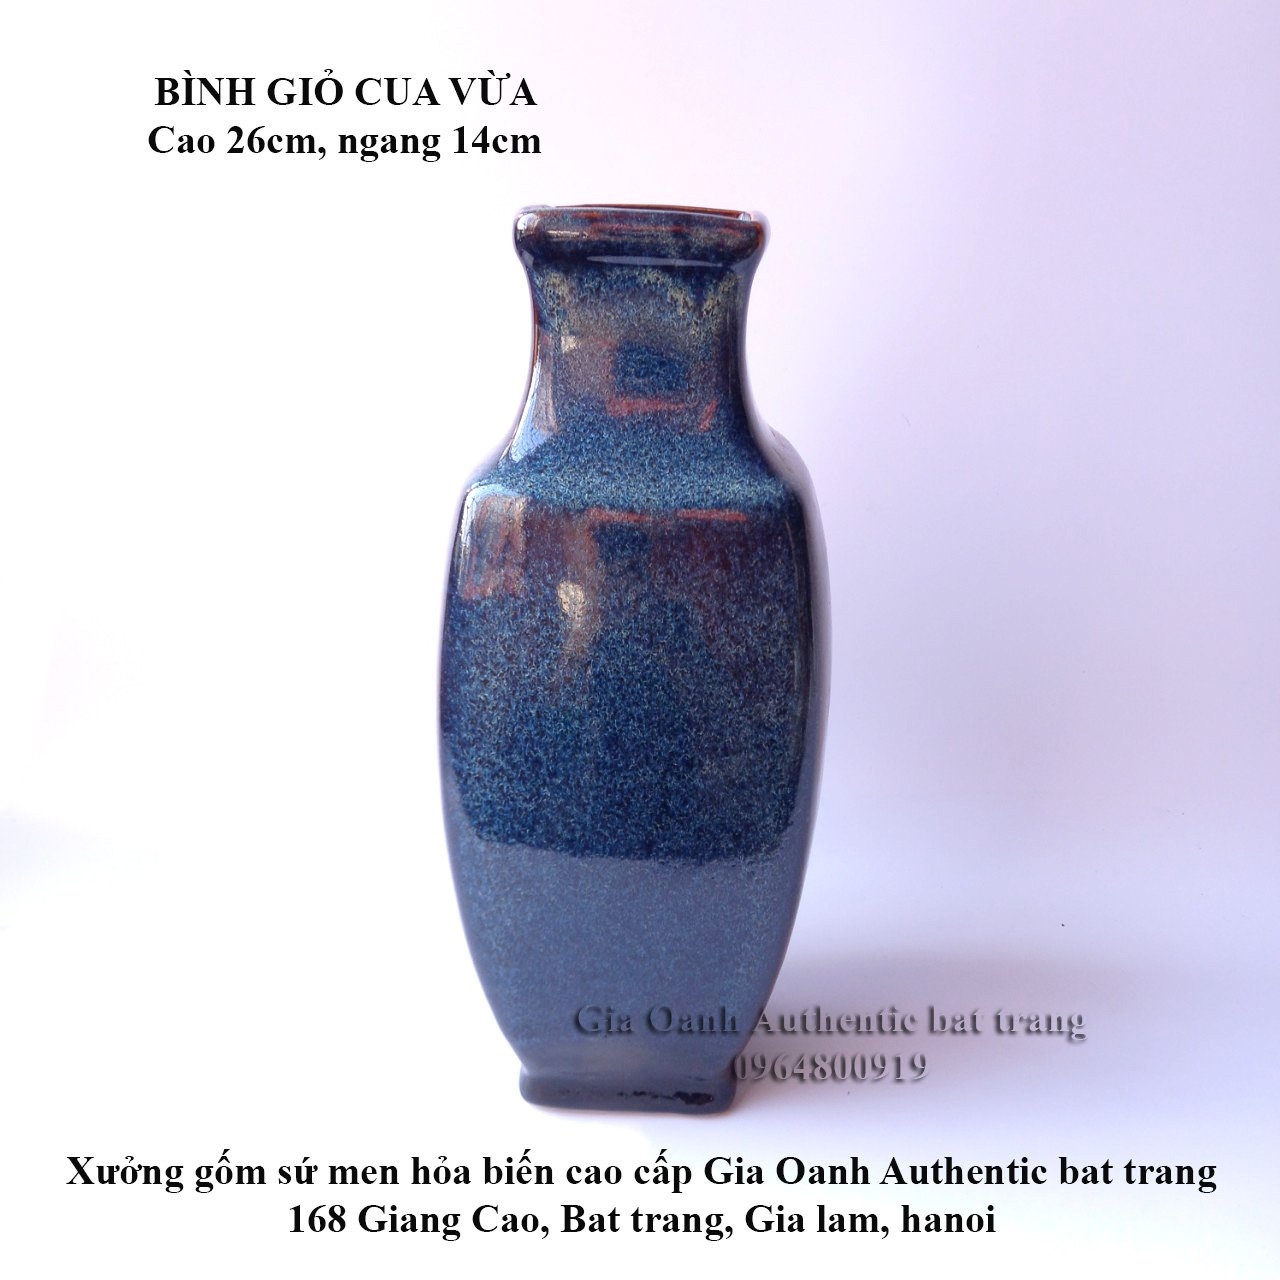 COLLECTIONS OF flower Vase, DECORATIVE Vase with blue Enamel - authentic bat trang CERAMIC FACTORY